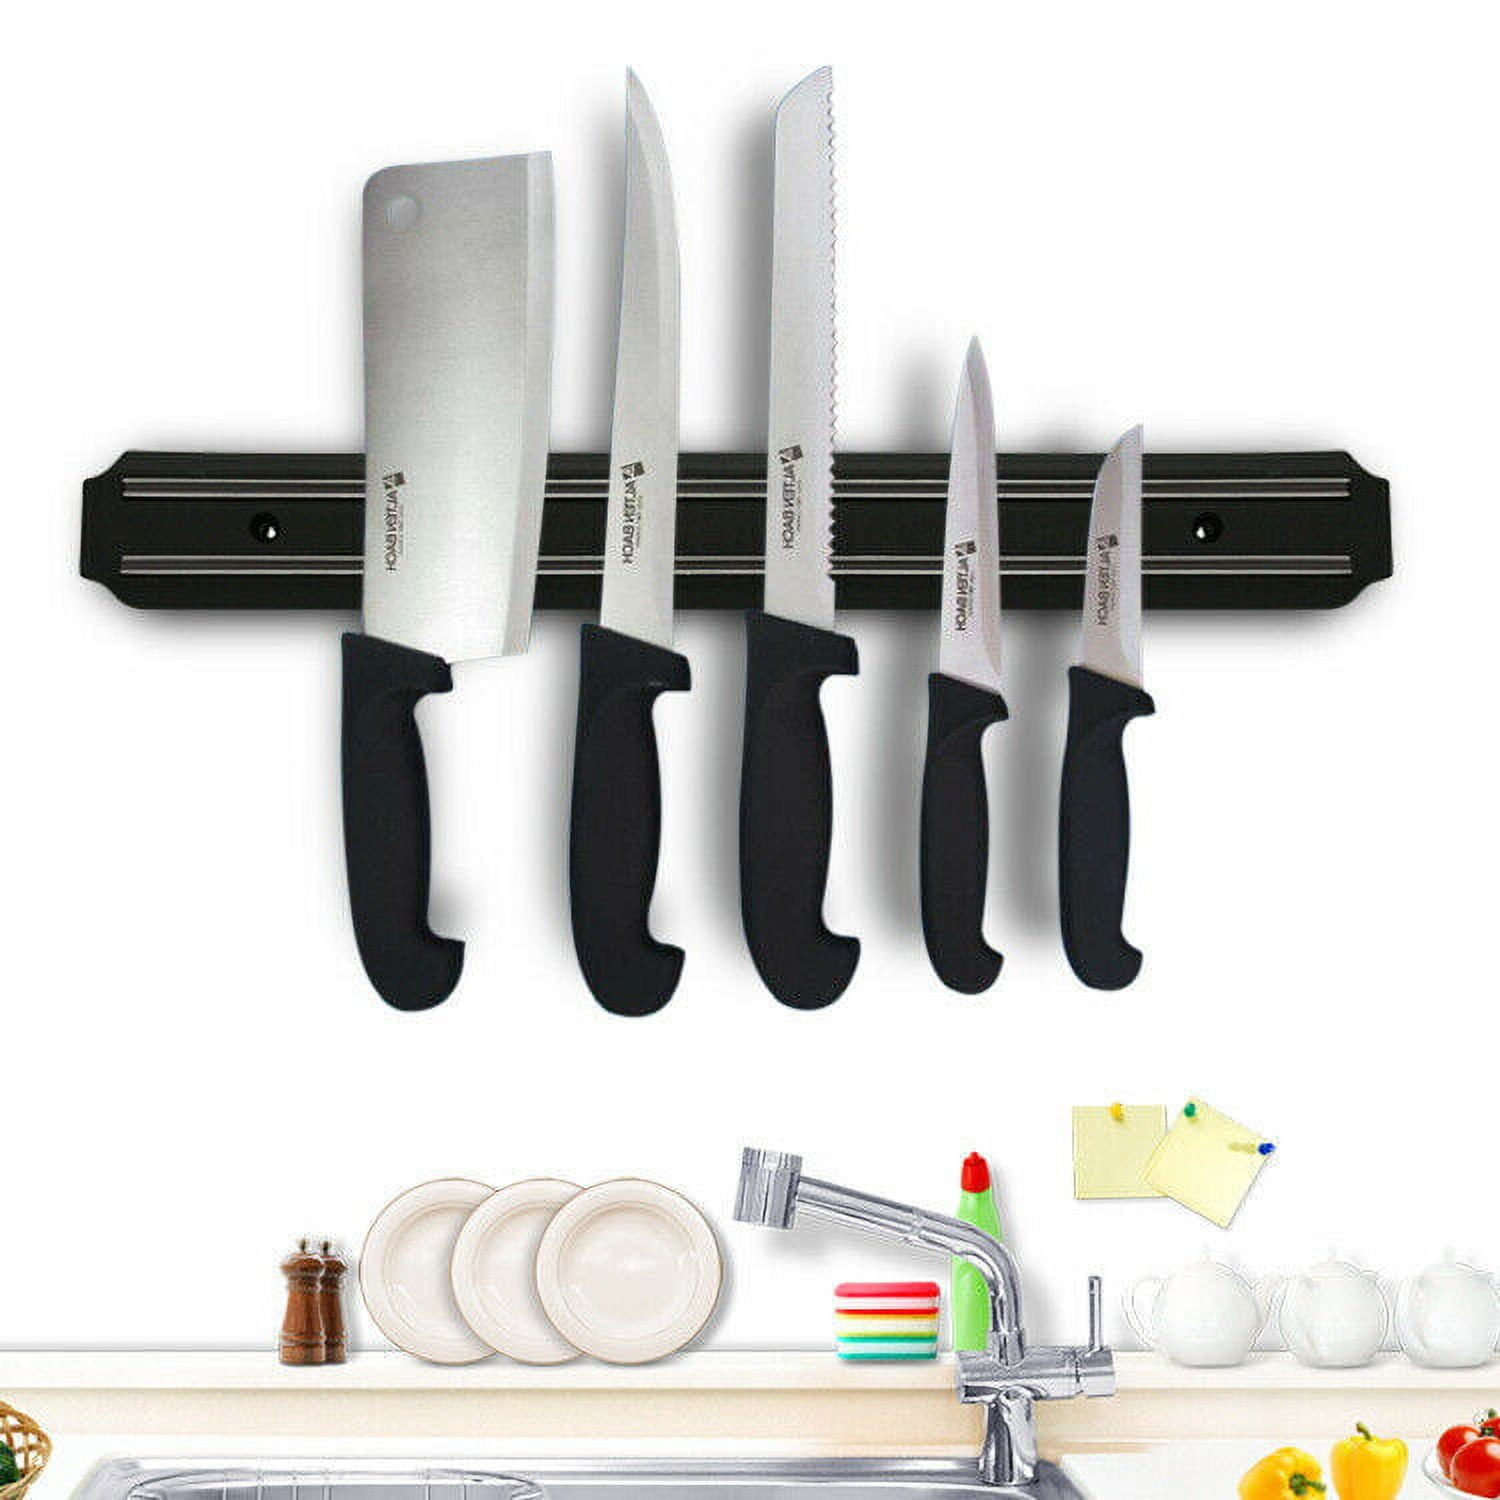 10 Magnetic Knife Holder Rack Block Kitchen Bar Magnet Strip Organizer  Wall Kit 817496021712